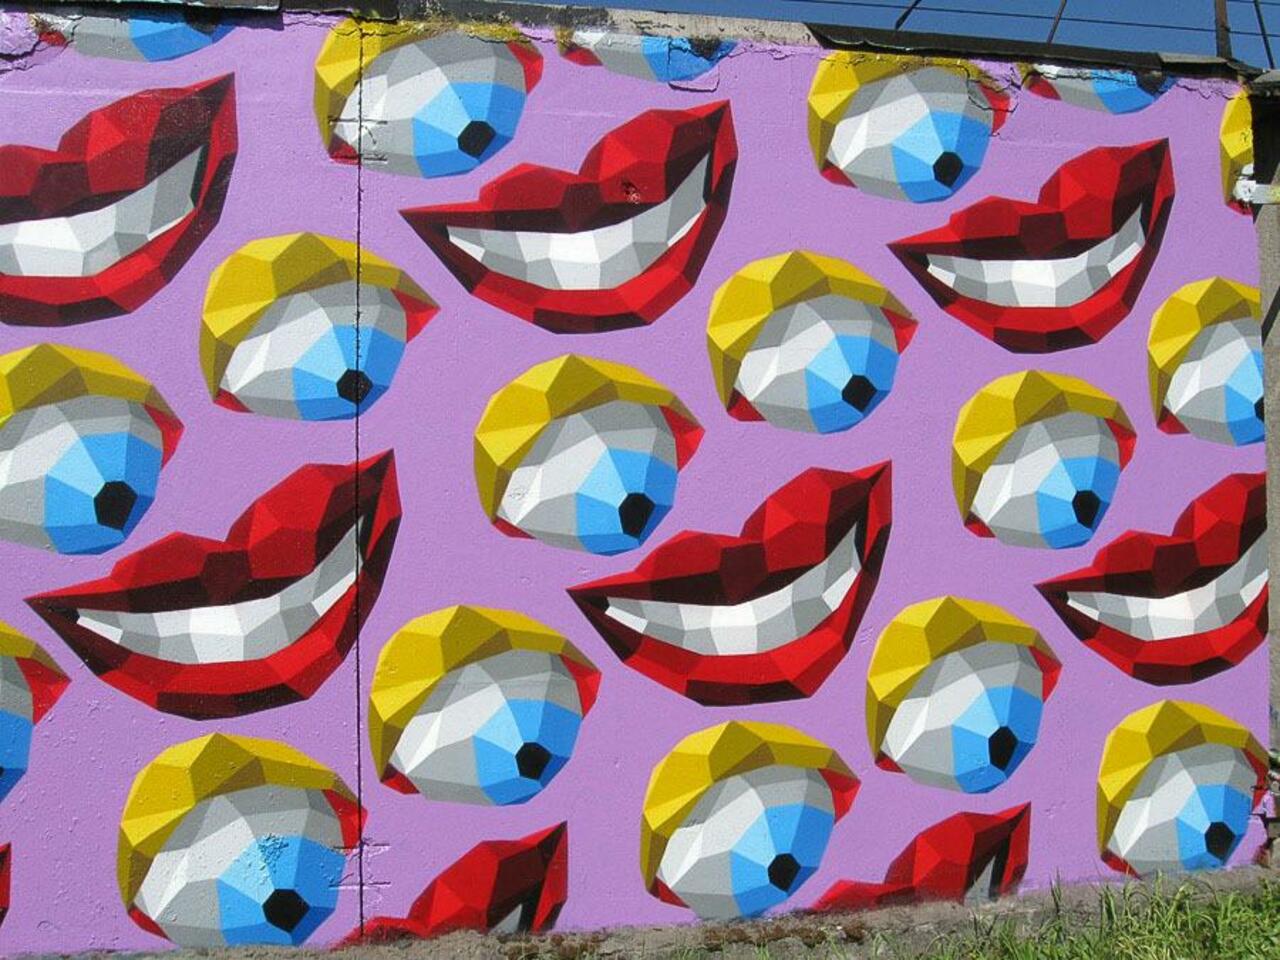 “@Brindille_: #Streetart #urbanart #graffiti #mural de l'#artiste Sy (Saint-Pétersbourg) http://t.co/LepXr2ZCgl”